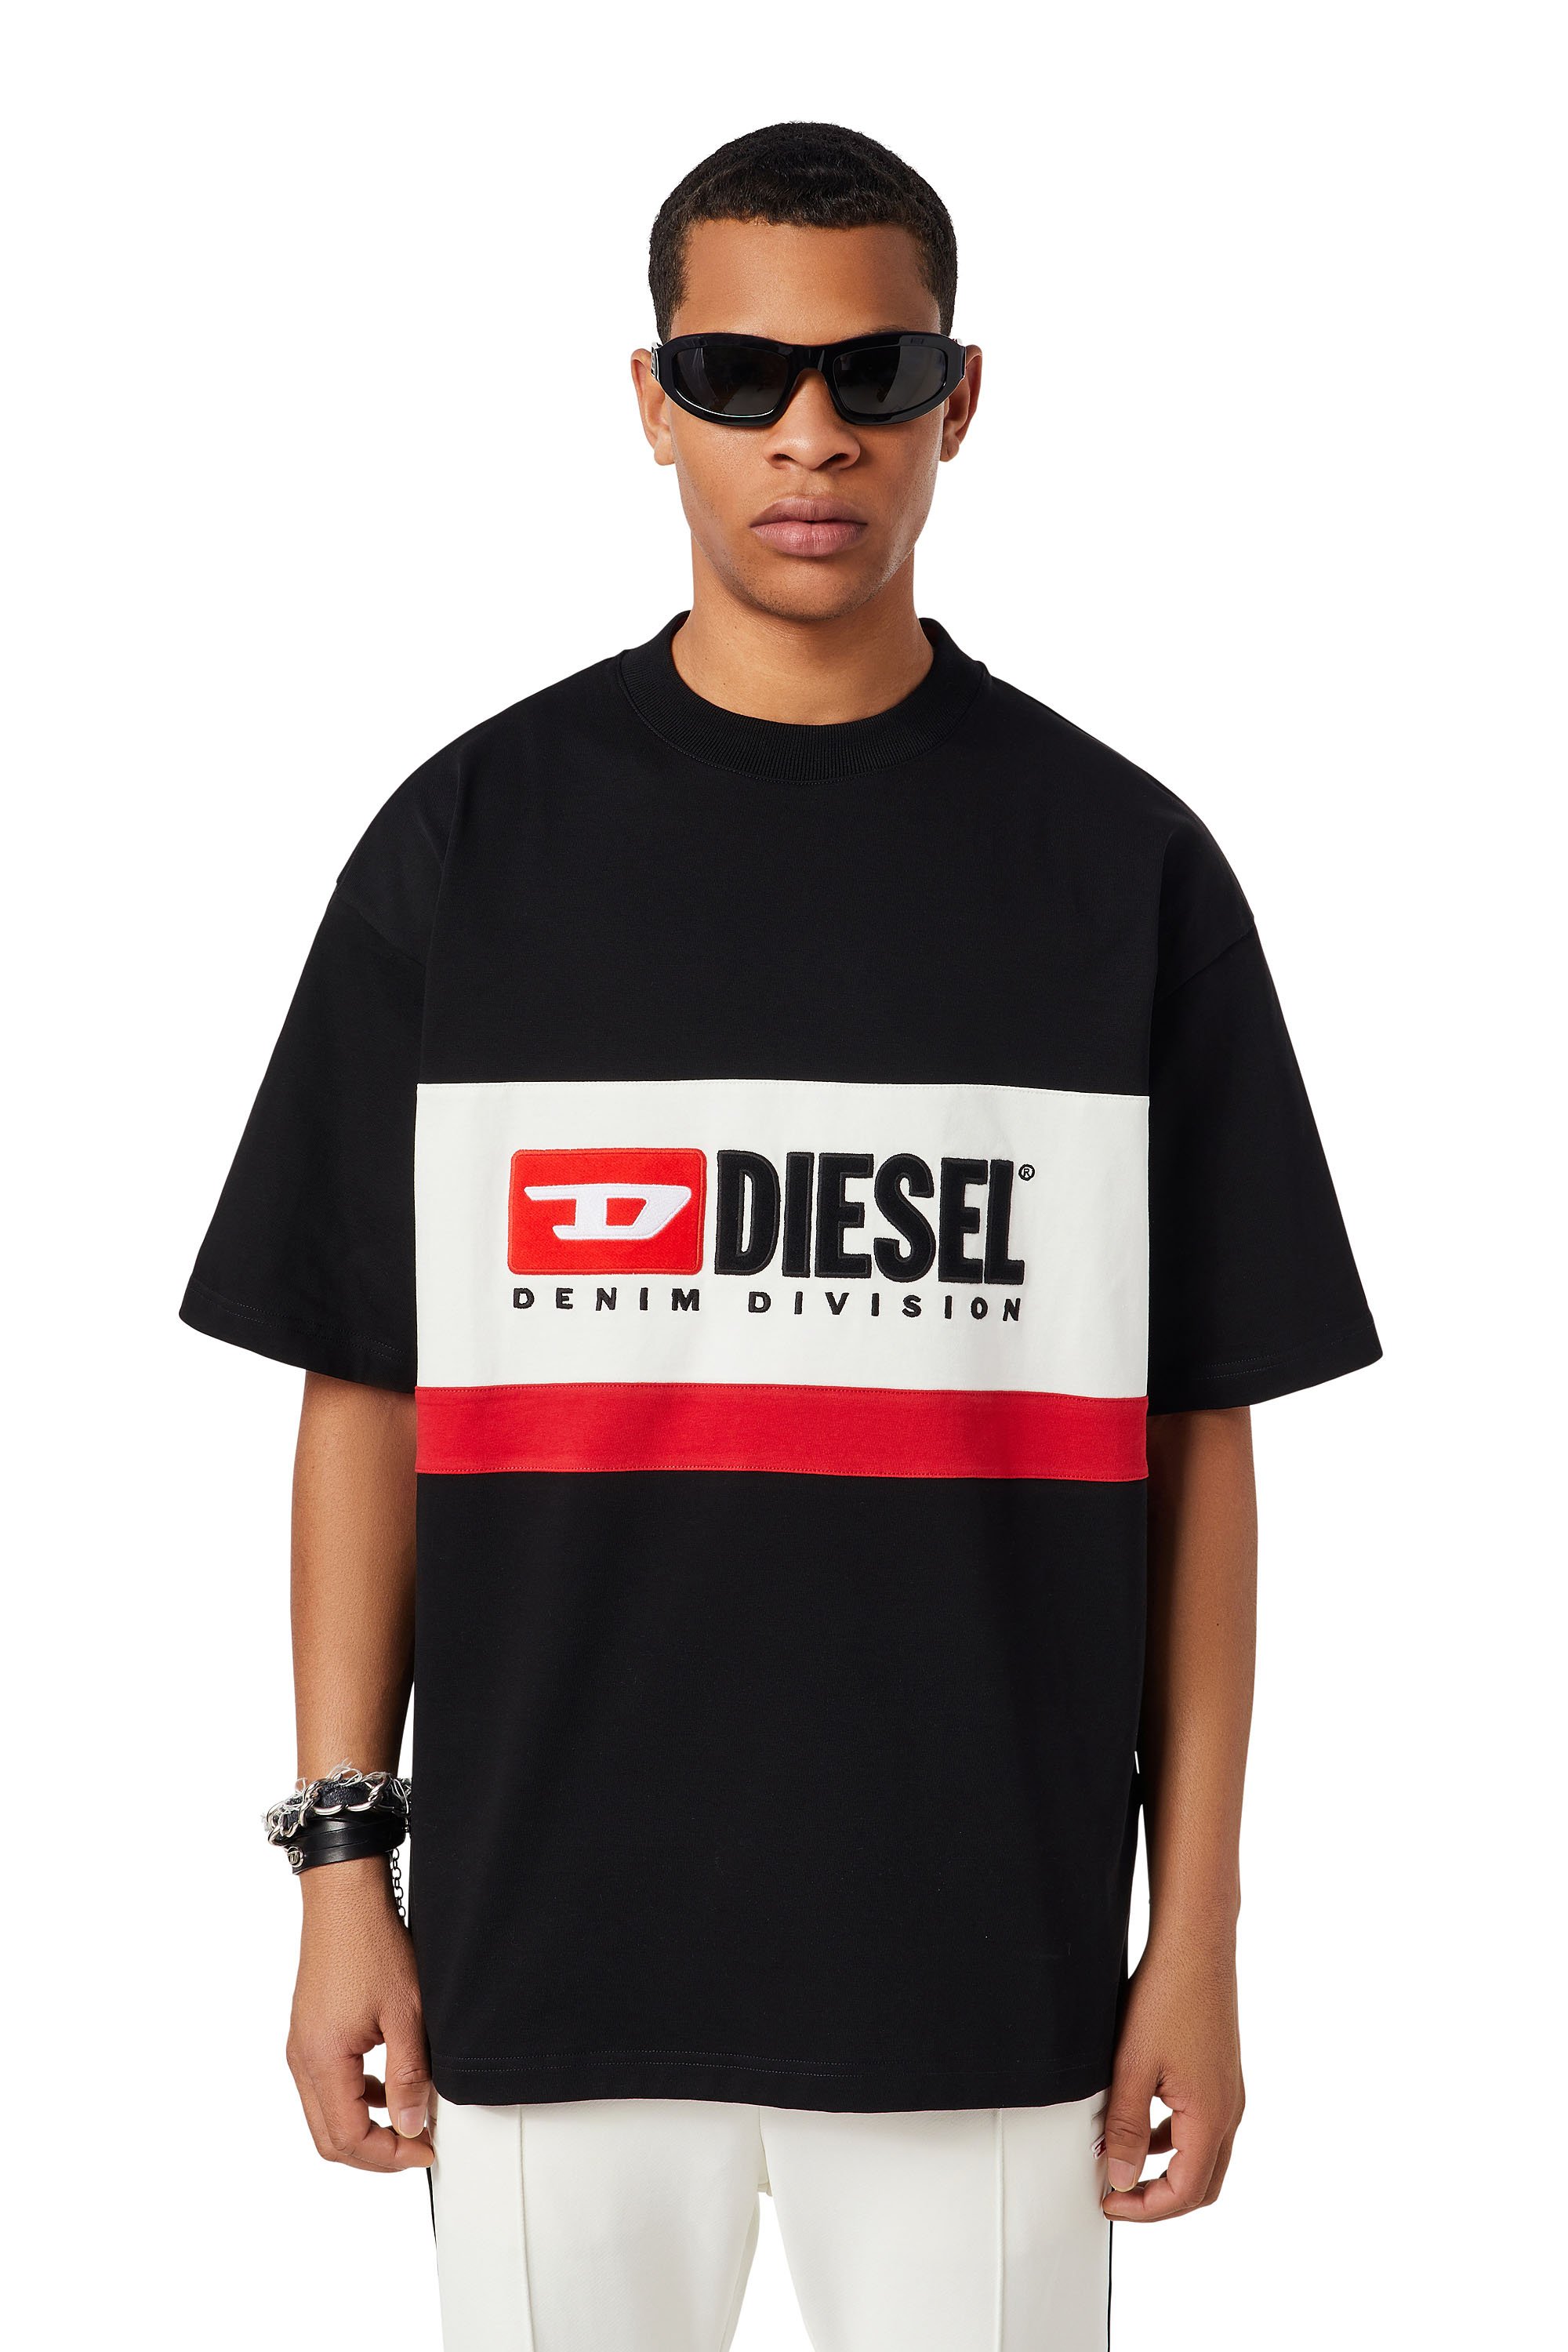 Diesel - T-STREAP-DIVISION, Black - Image 2